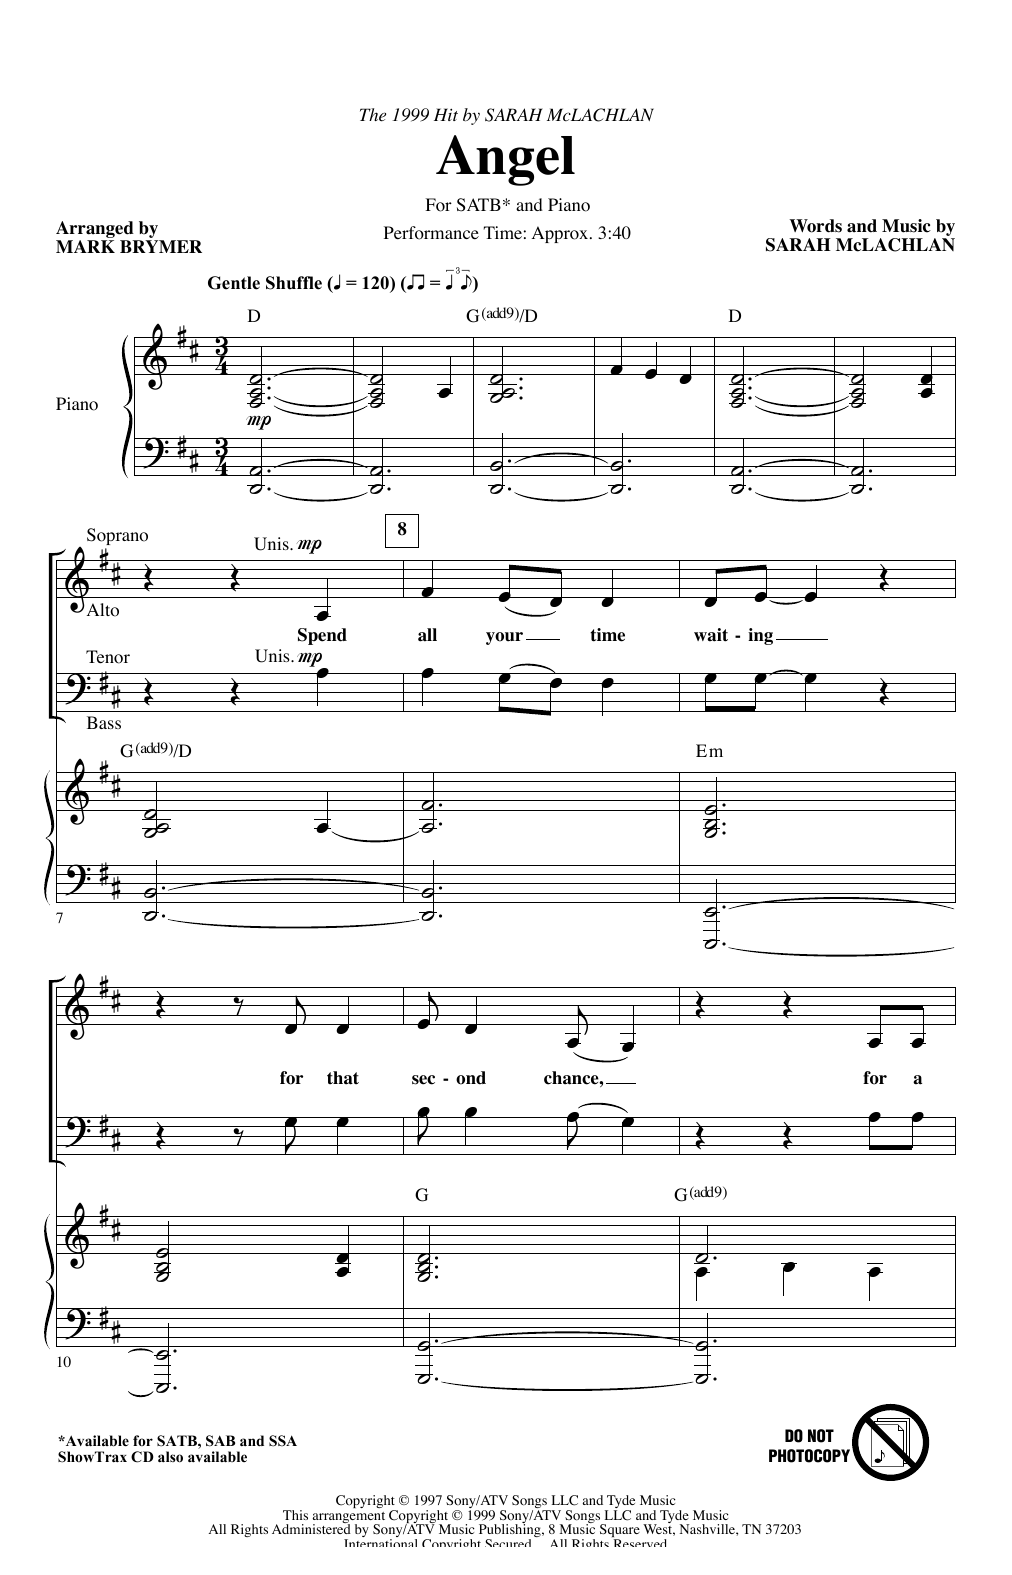 Sarah McLachlan Angel (arr. Mark Brymer) Sheet Music Notes & Chords for SAB Choir - Download or Print PDF